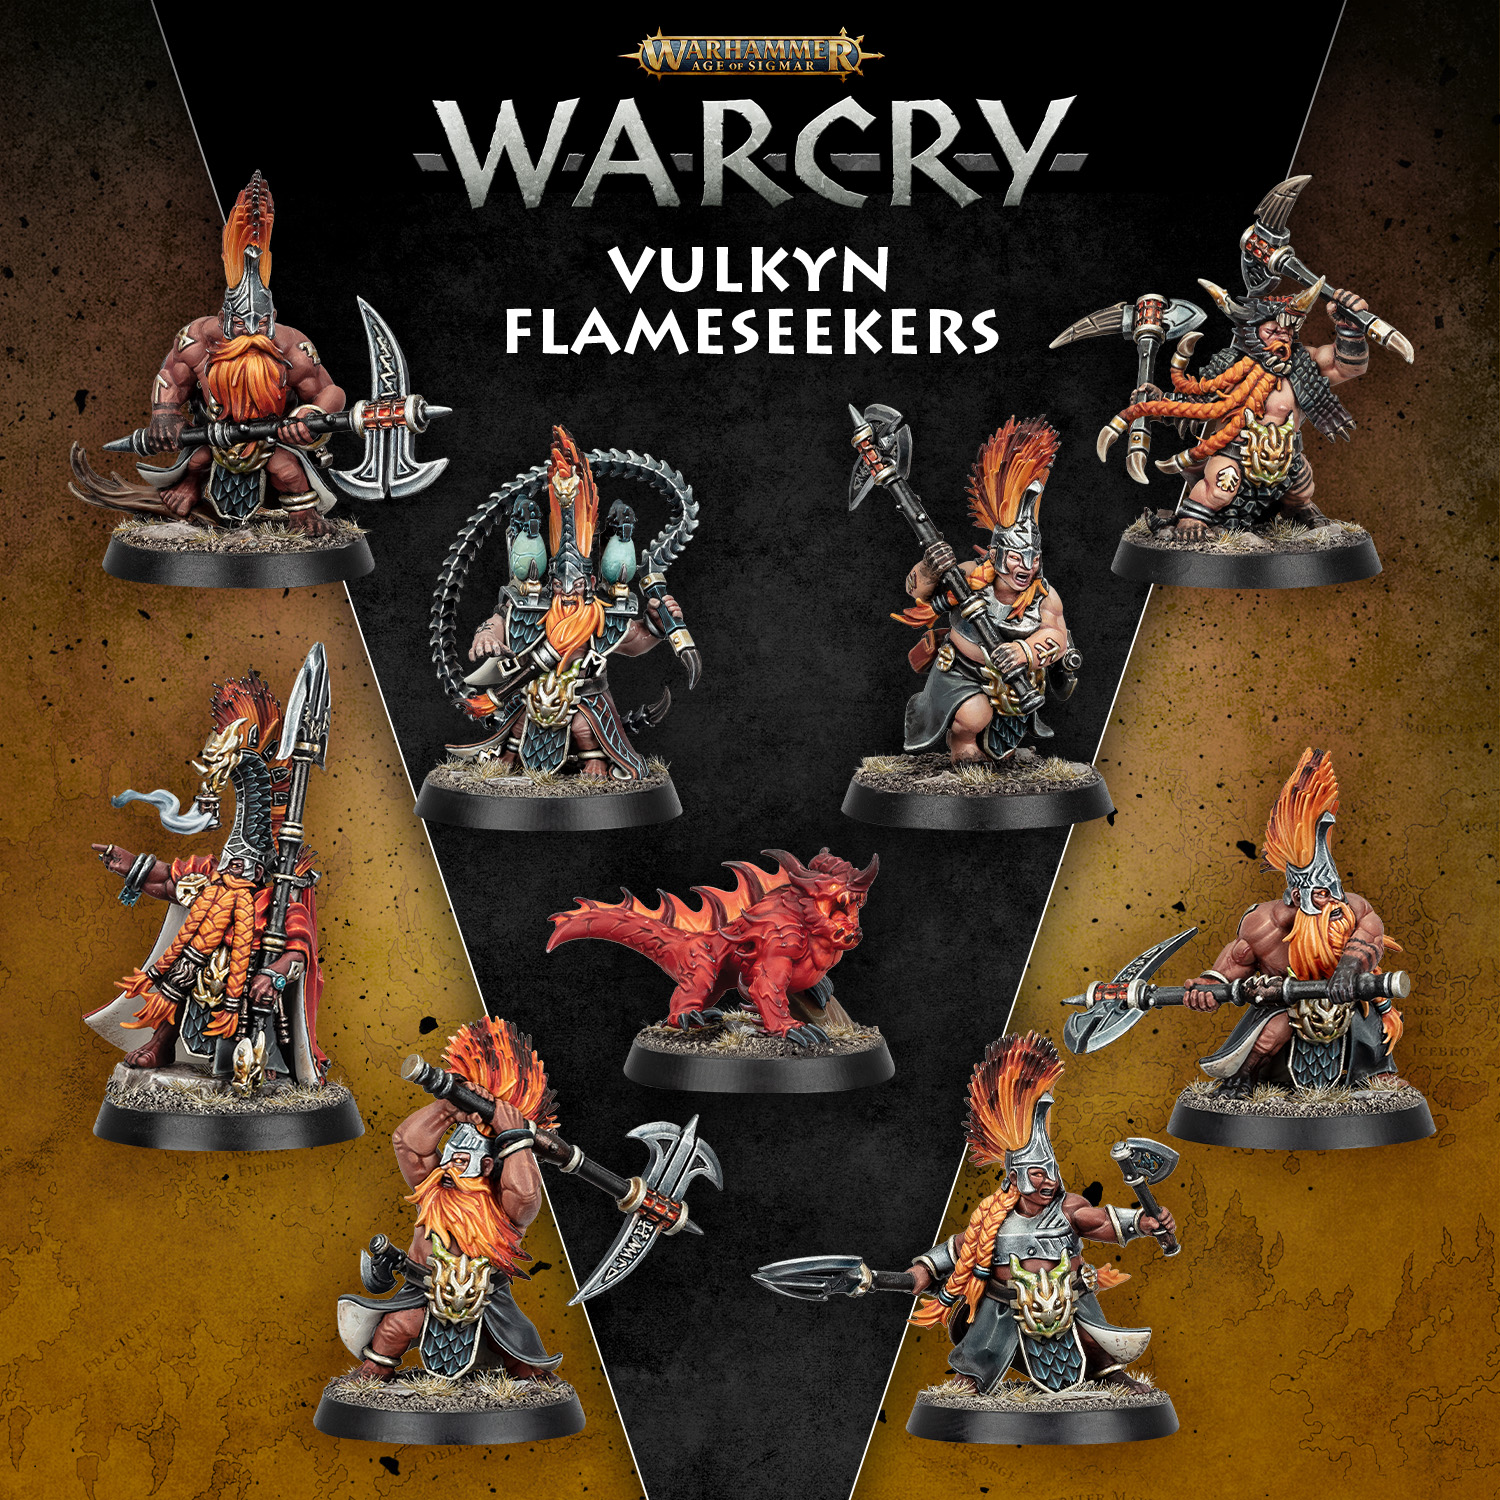 Vulkyn Flameseekers - Warhammer Age Of Sigmar Warcry